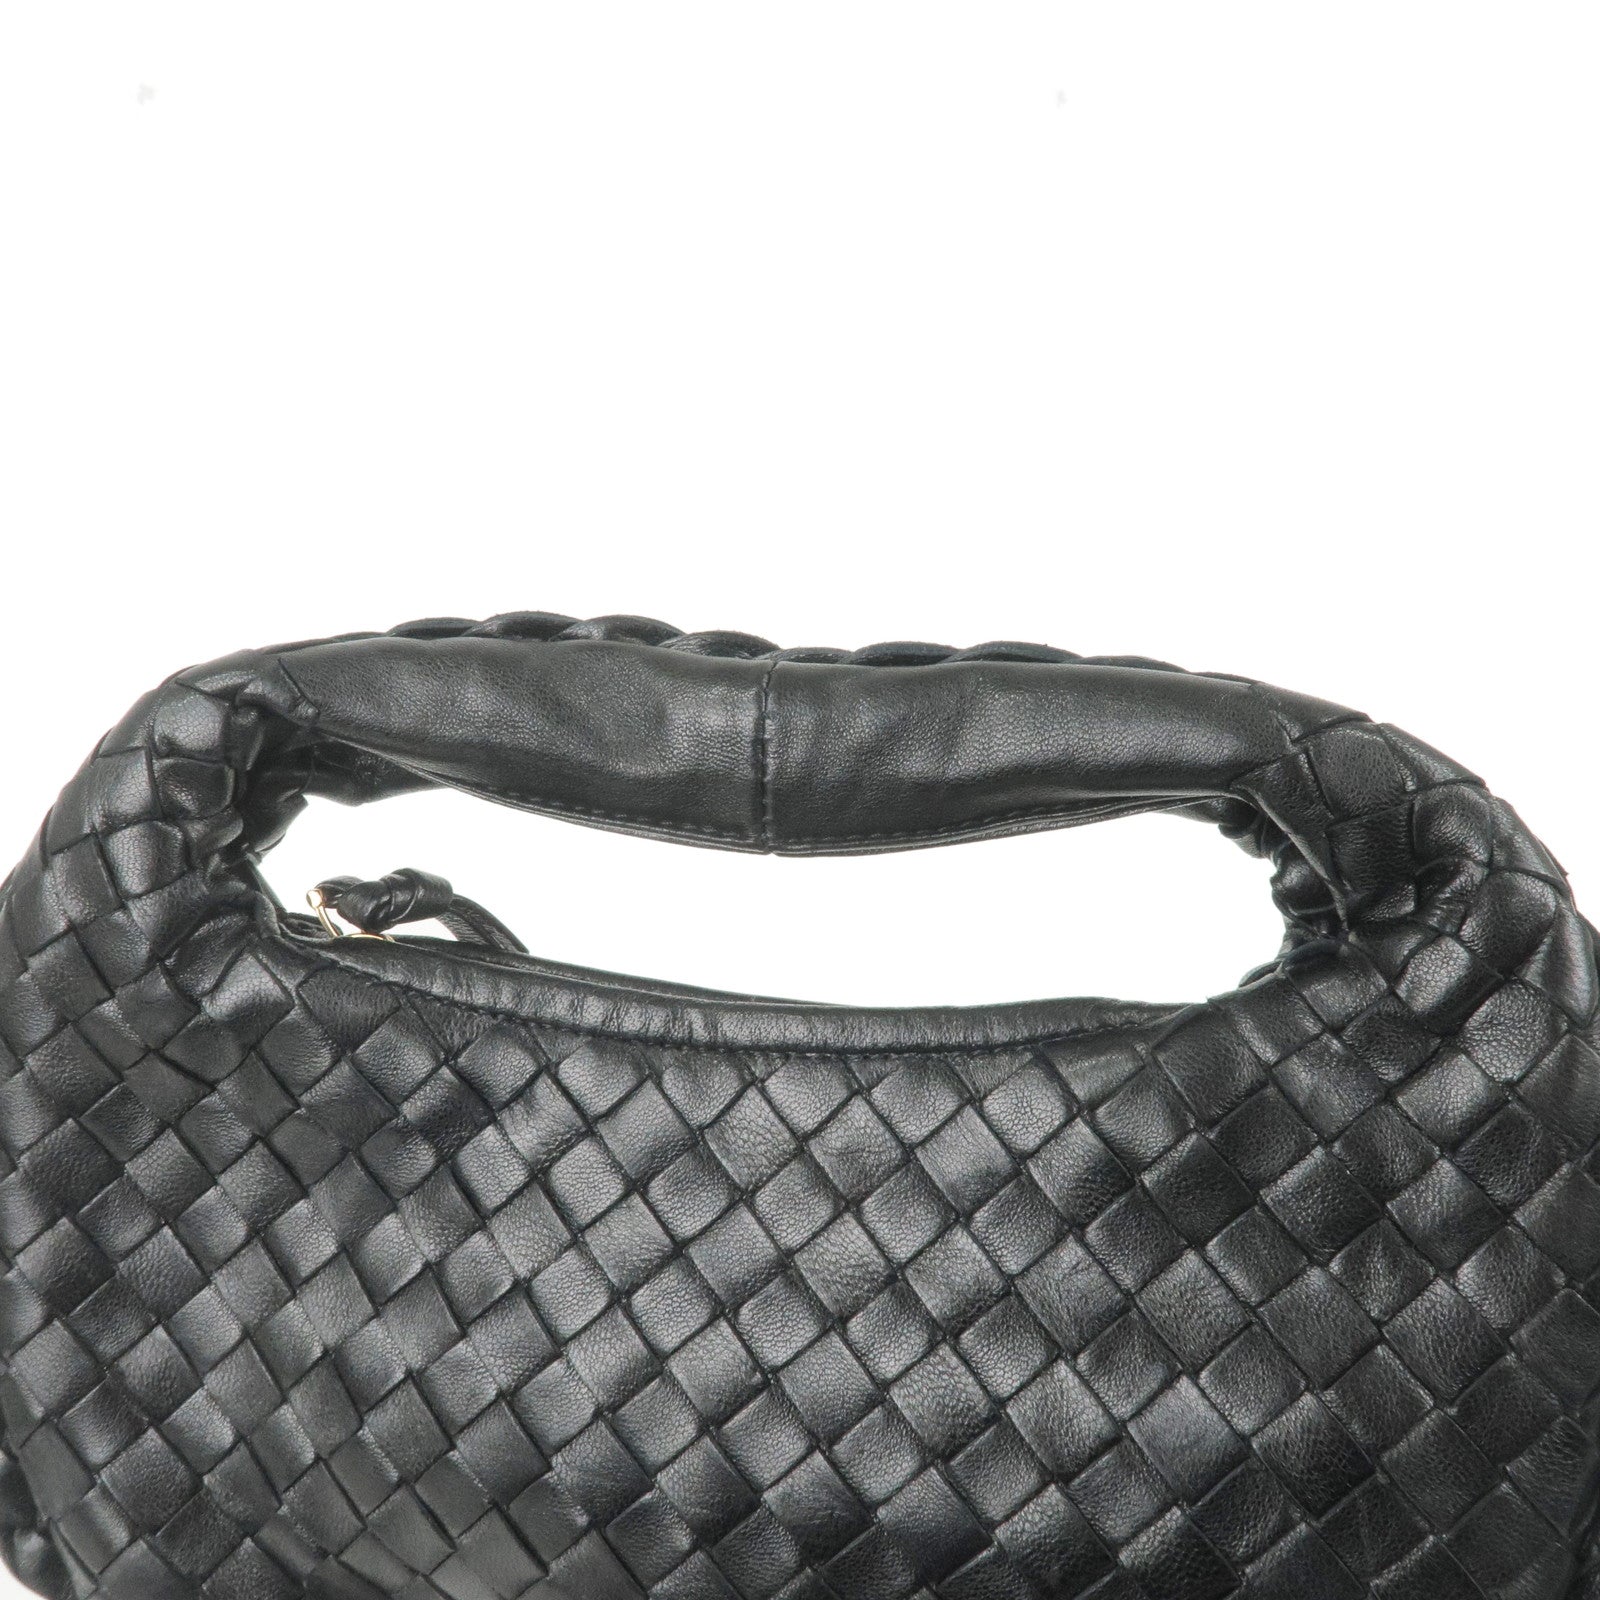 Bottega Veneta Intrecciato Leather Shoulder Bag Second Hand / Selling